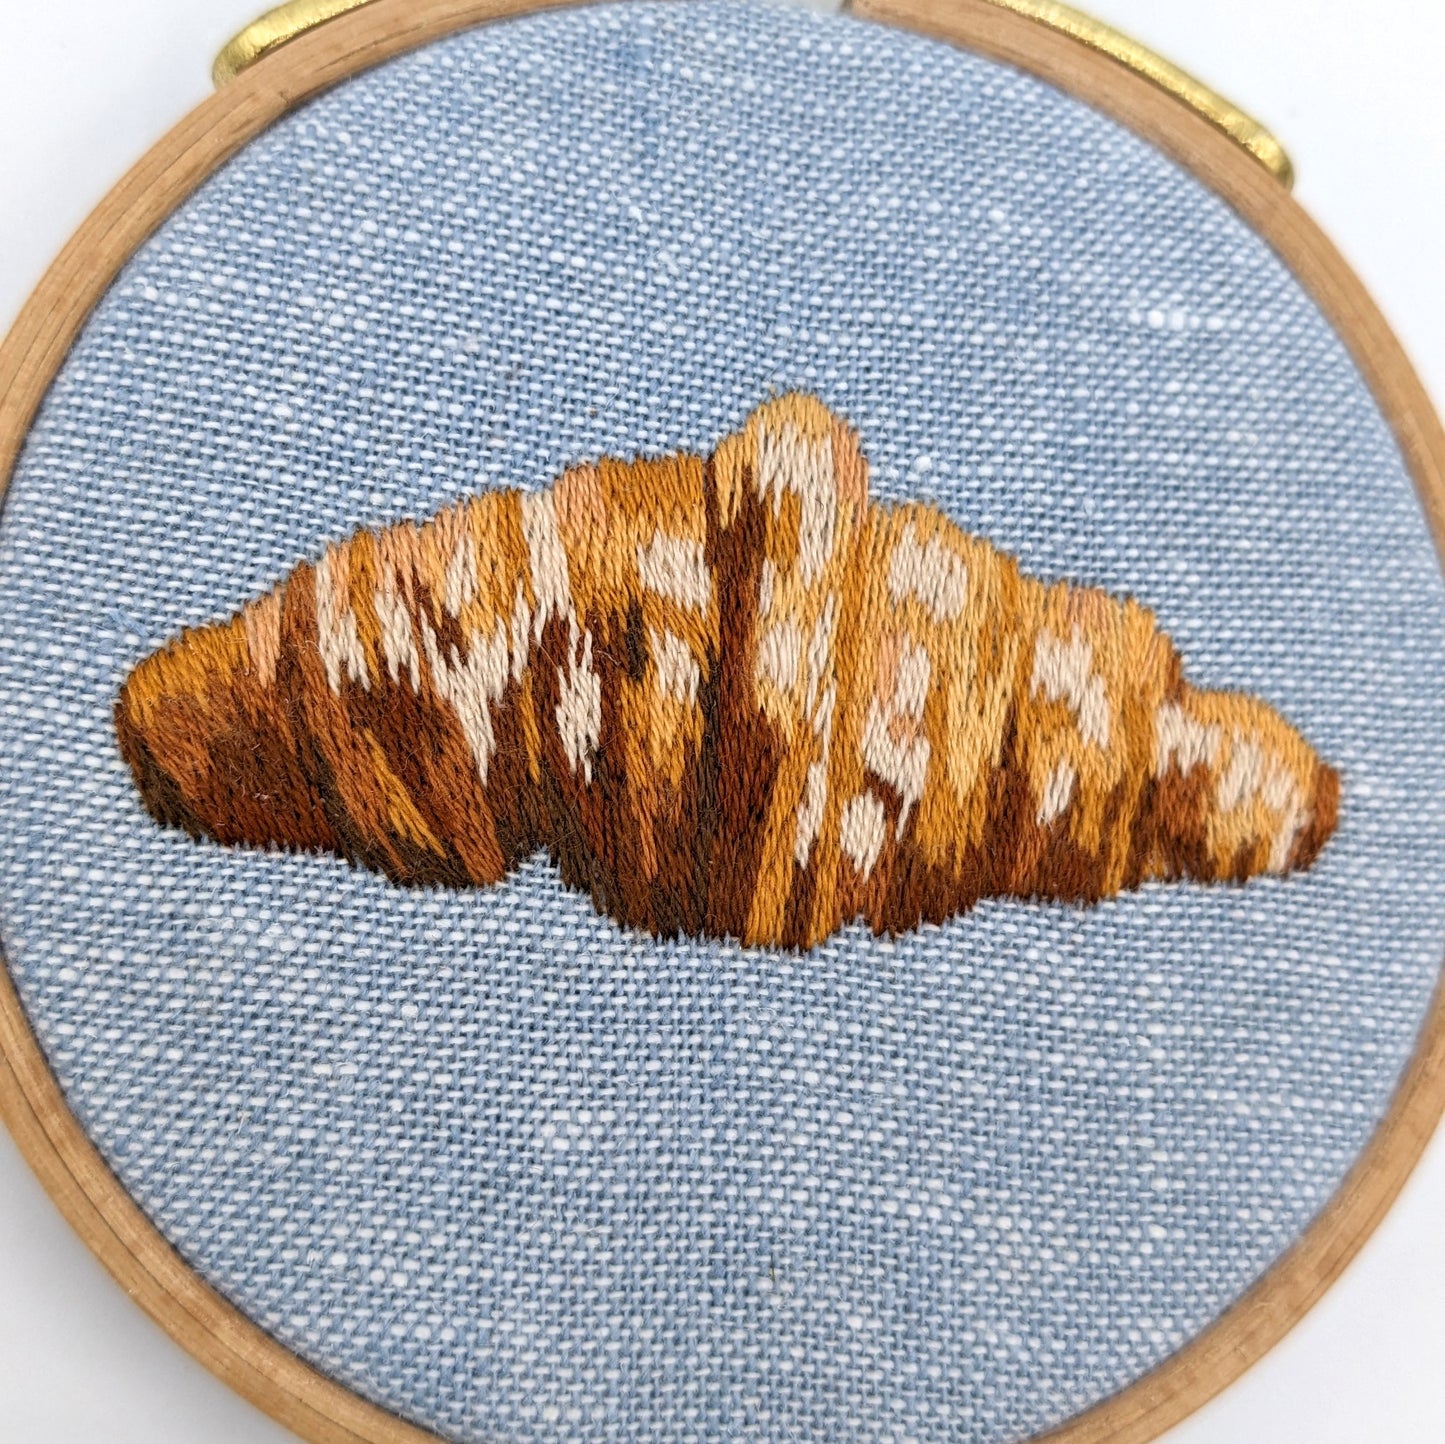 Croissant Embroidery Hoop Art